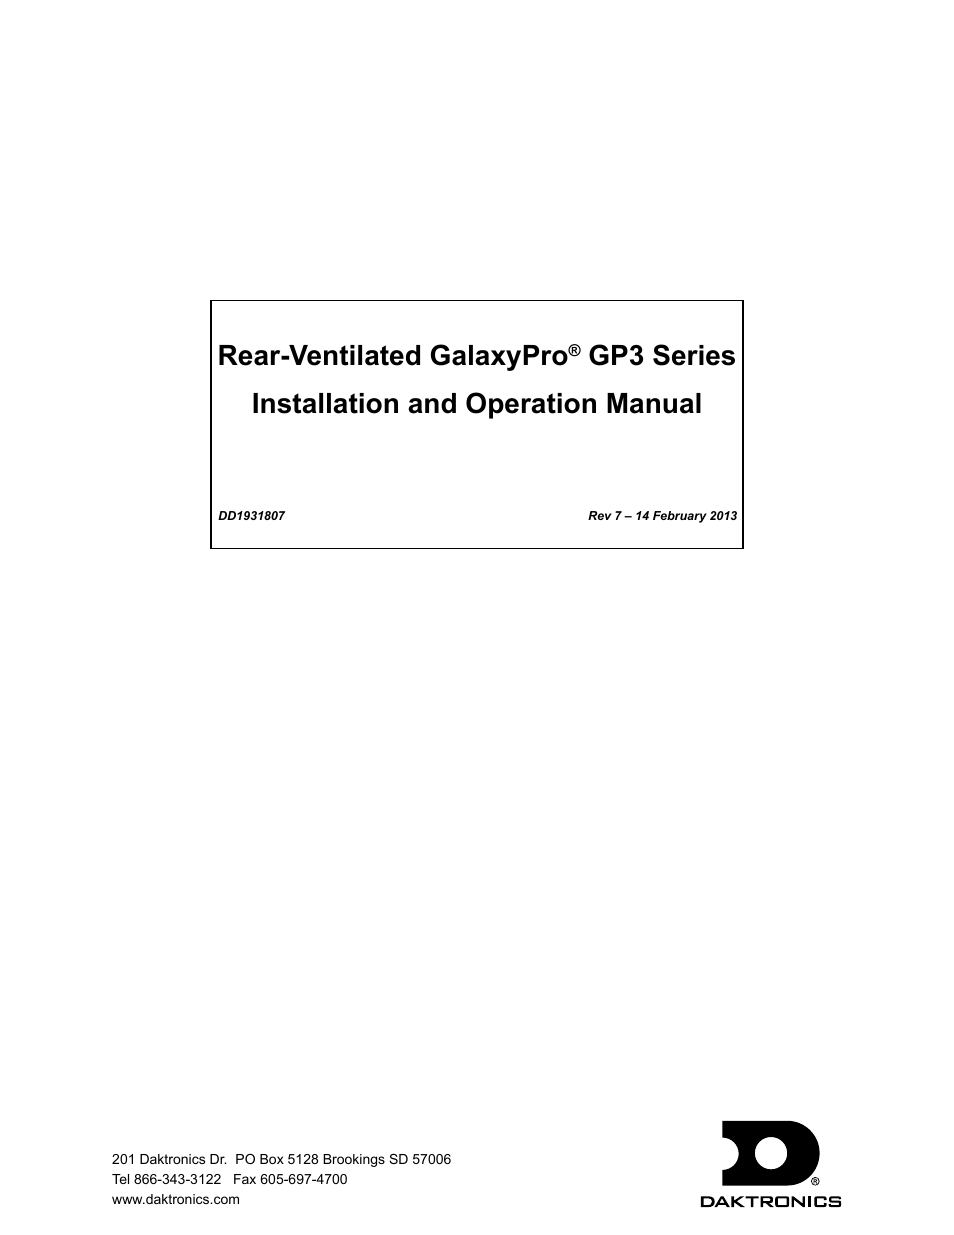 Rear-Ventilated GalaxyPro GP3 Series